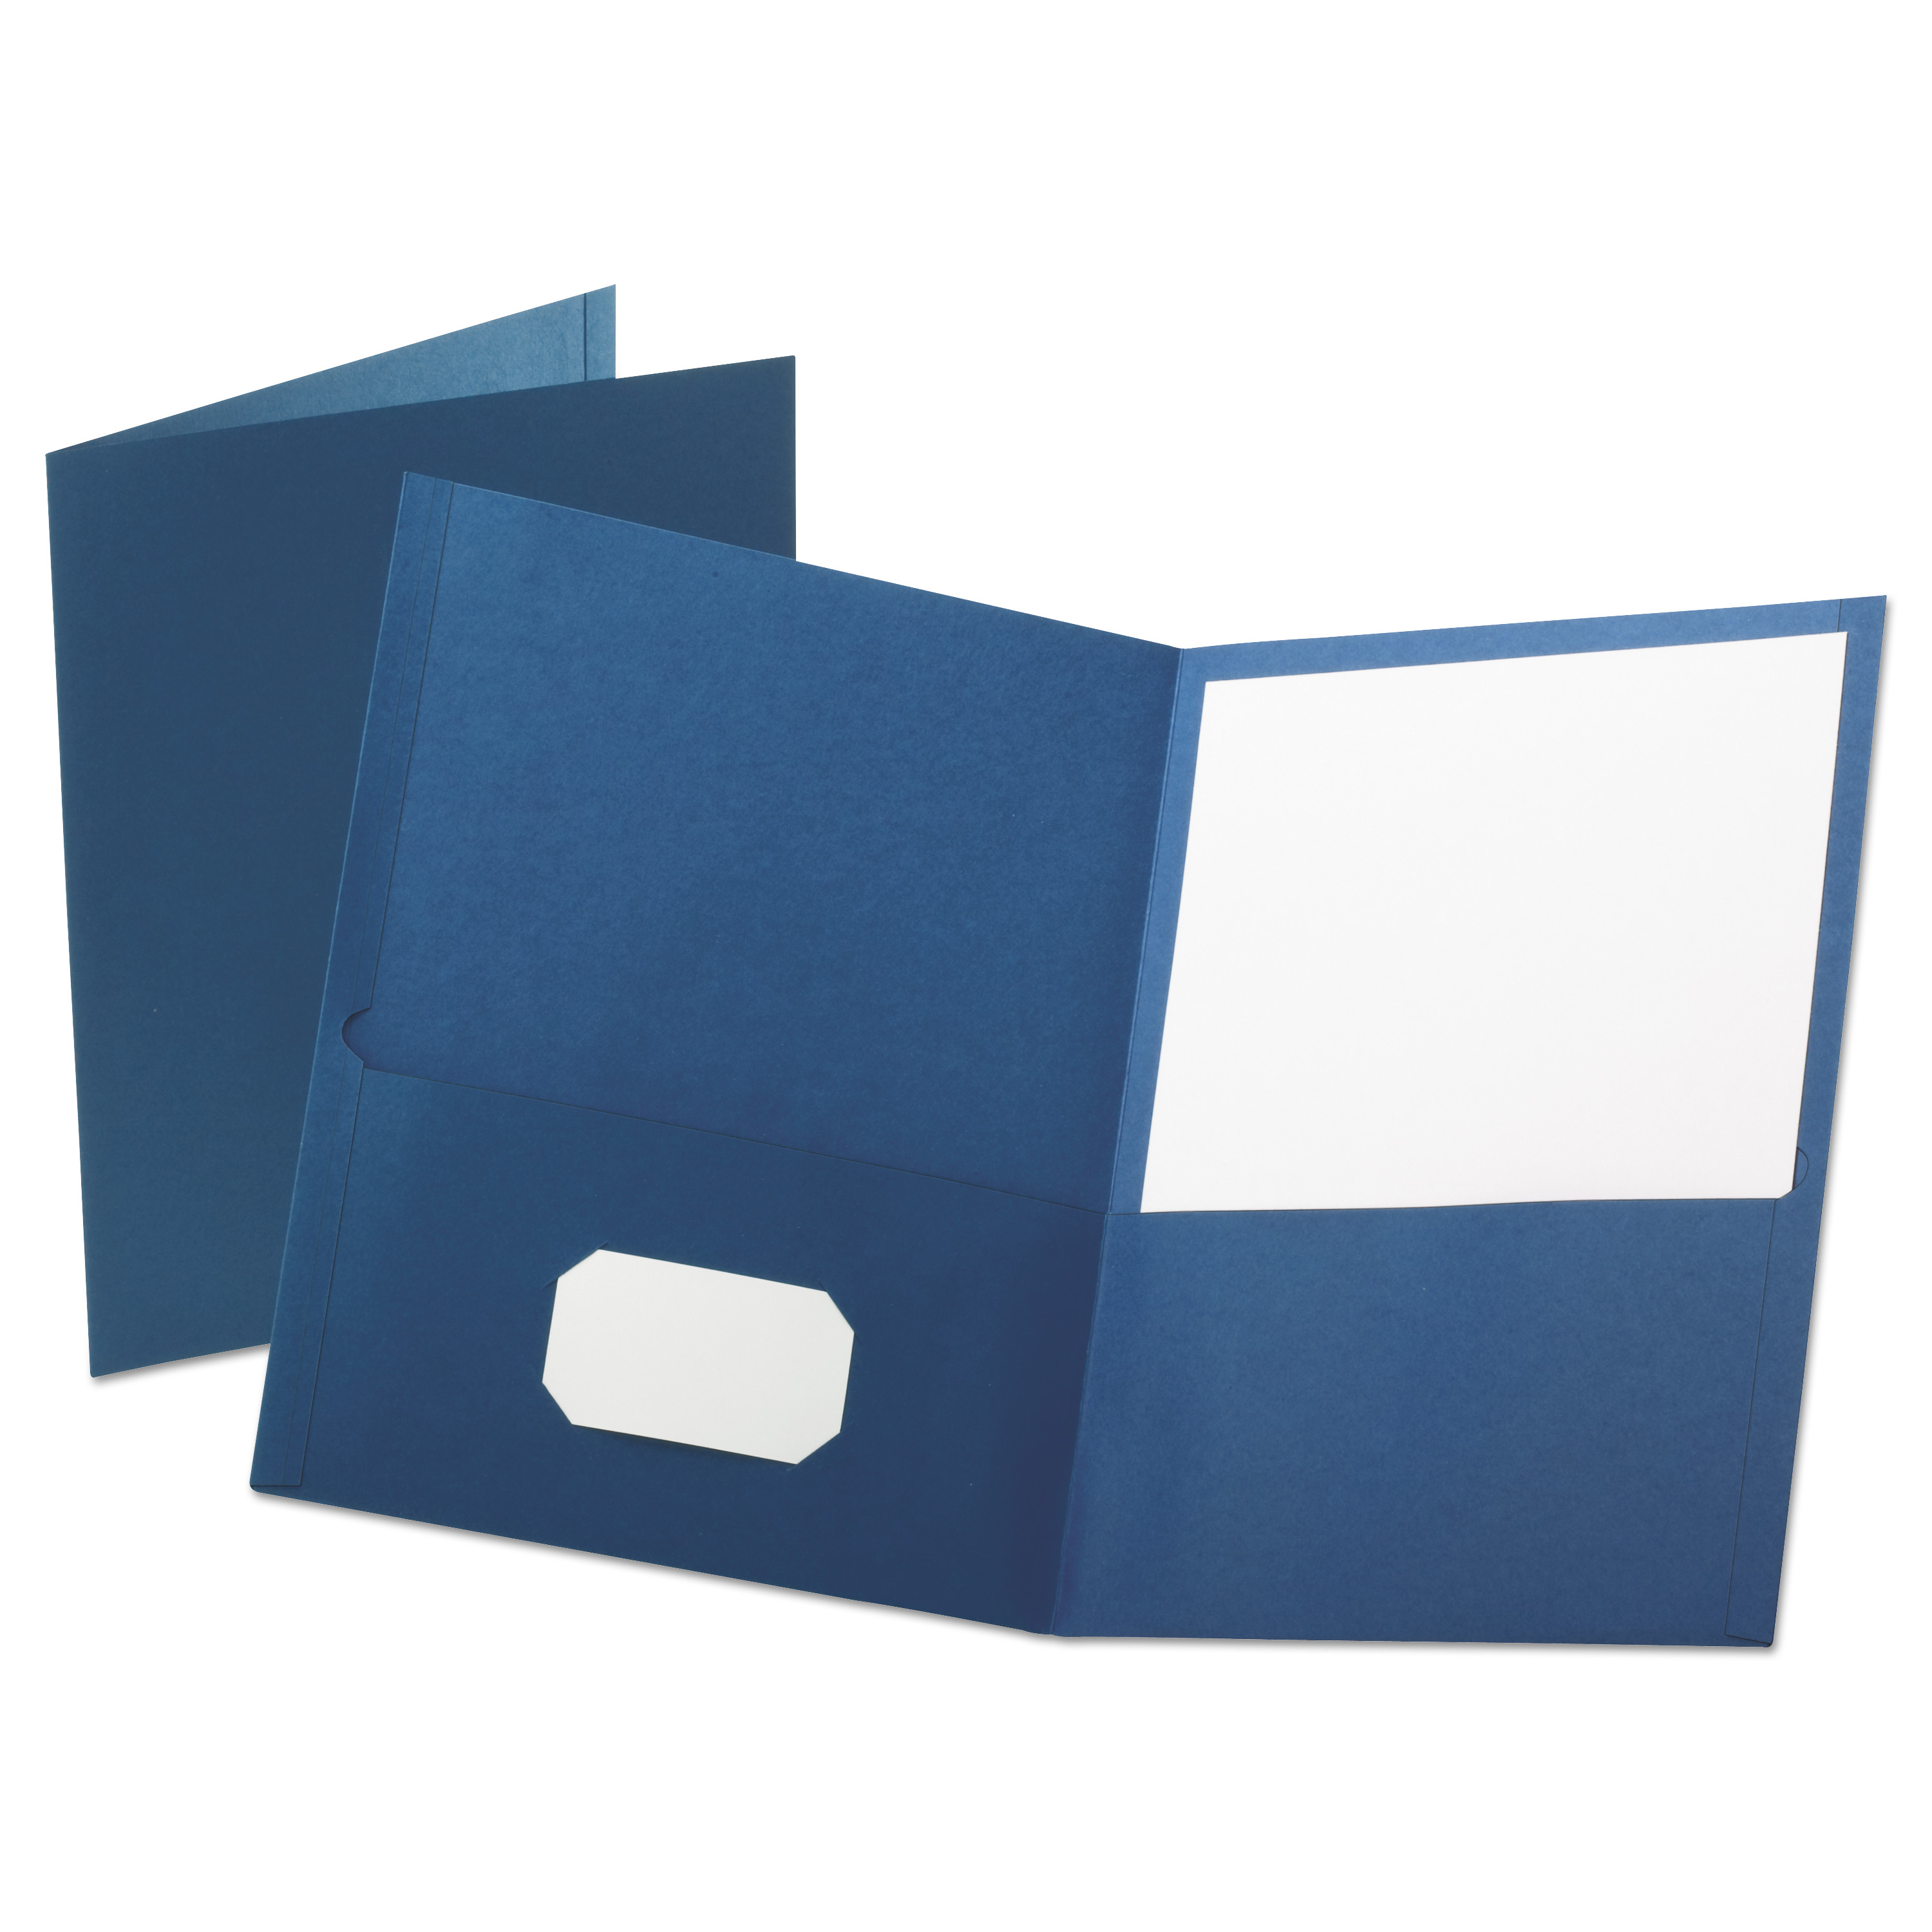  Oxford 57572 Leatherette Two Pocket Portfolio, 8 1/2 x 11, Blue, 10/PK (OXF57572) 